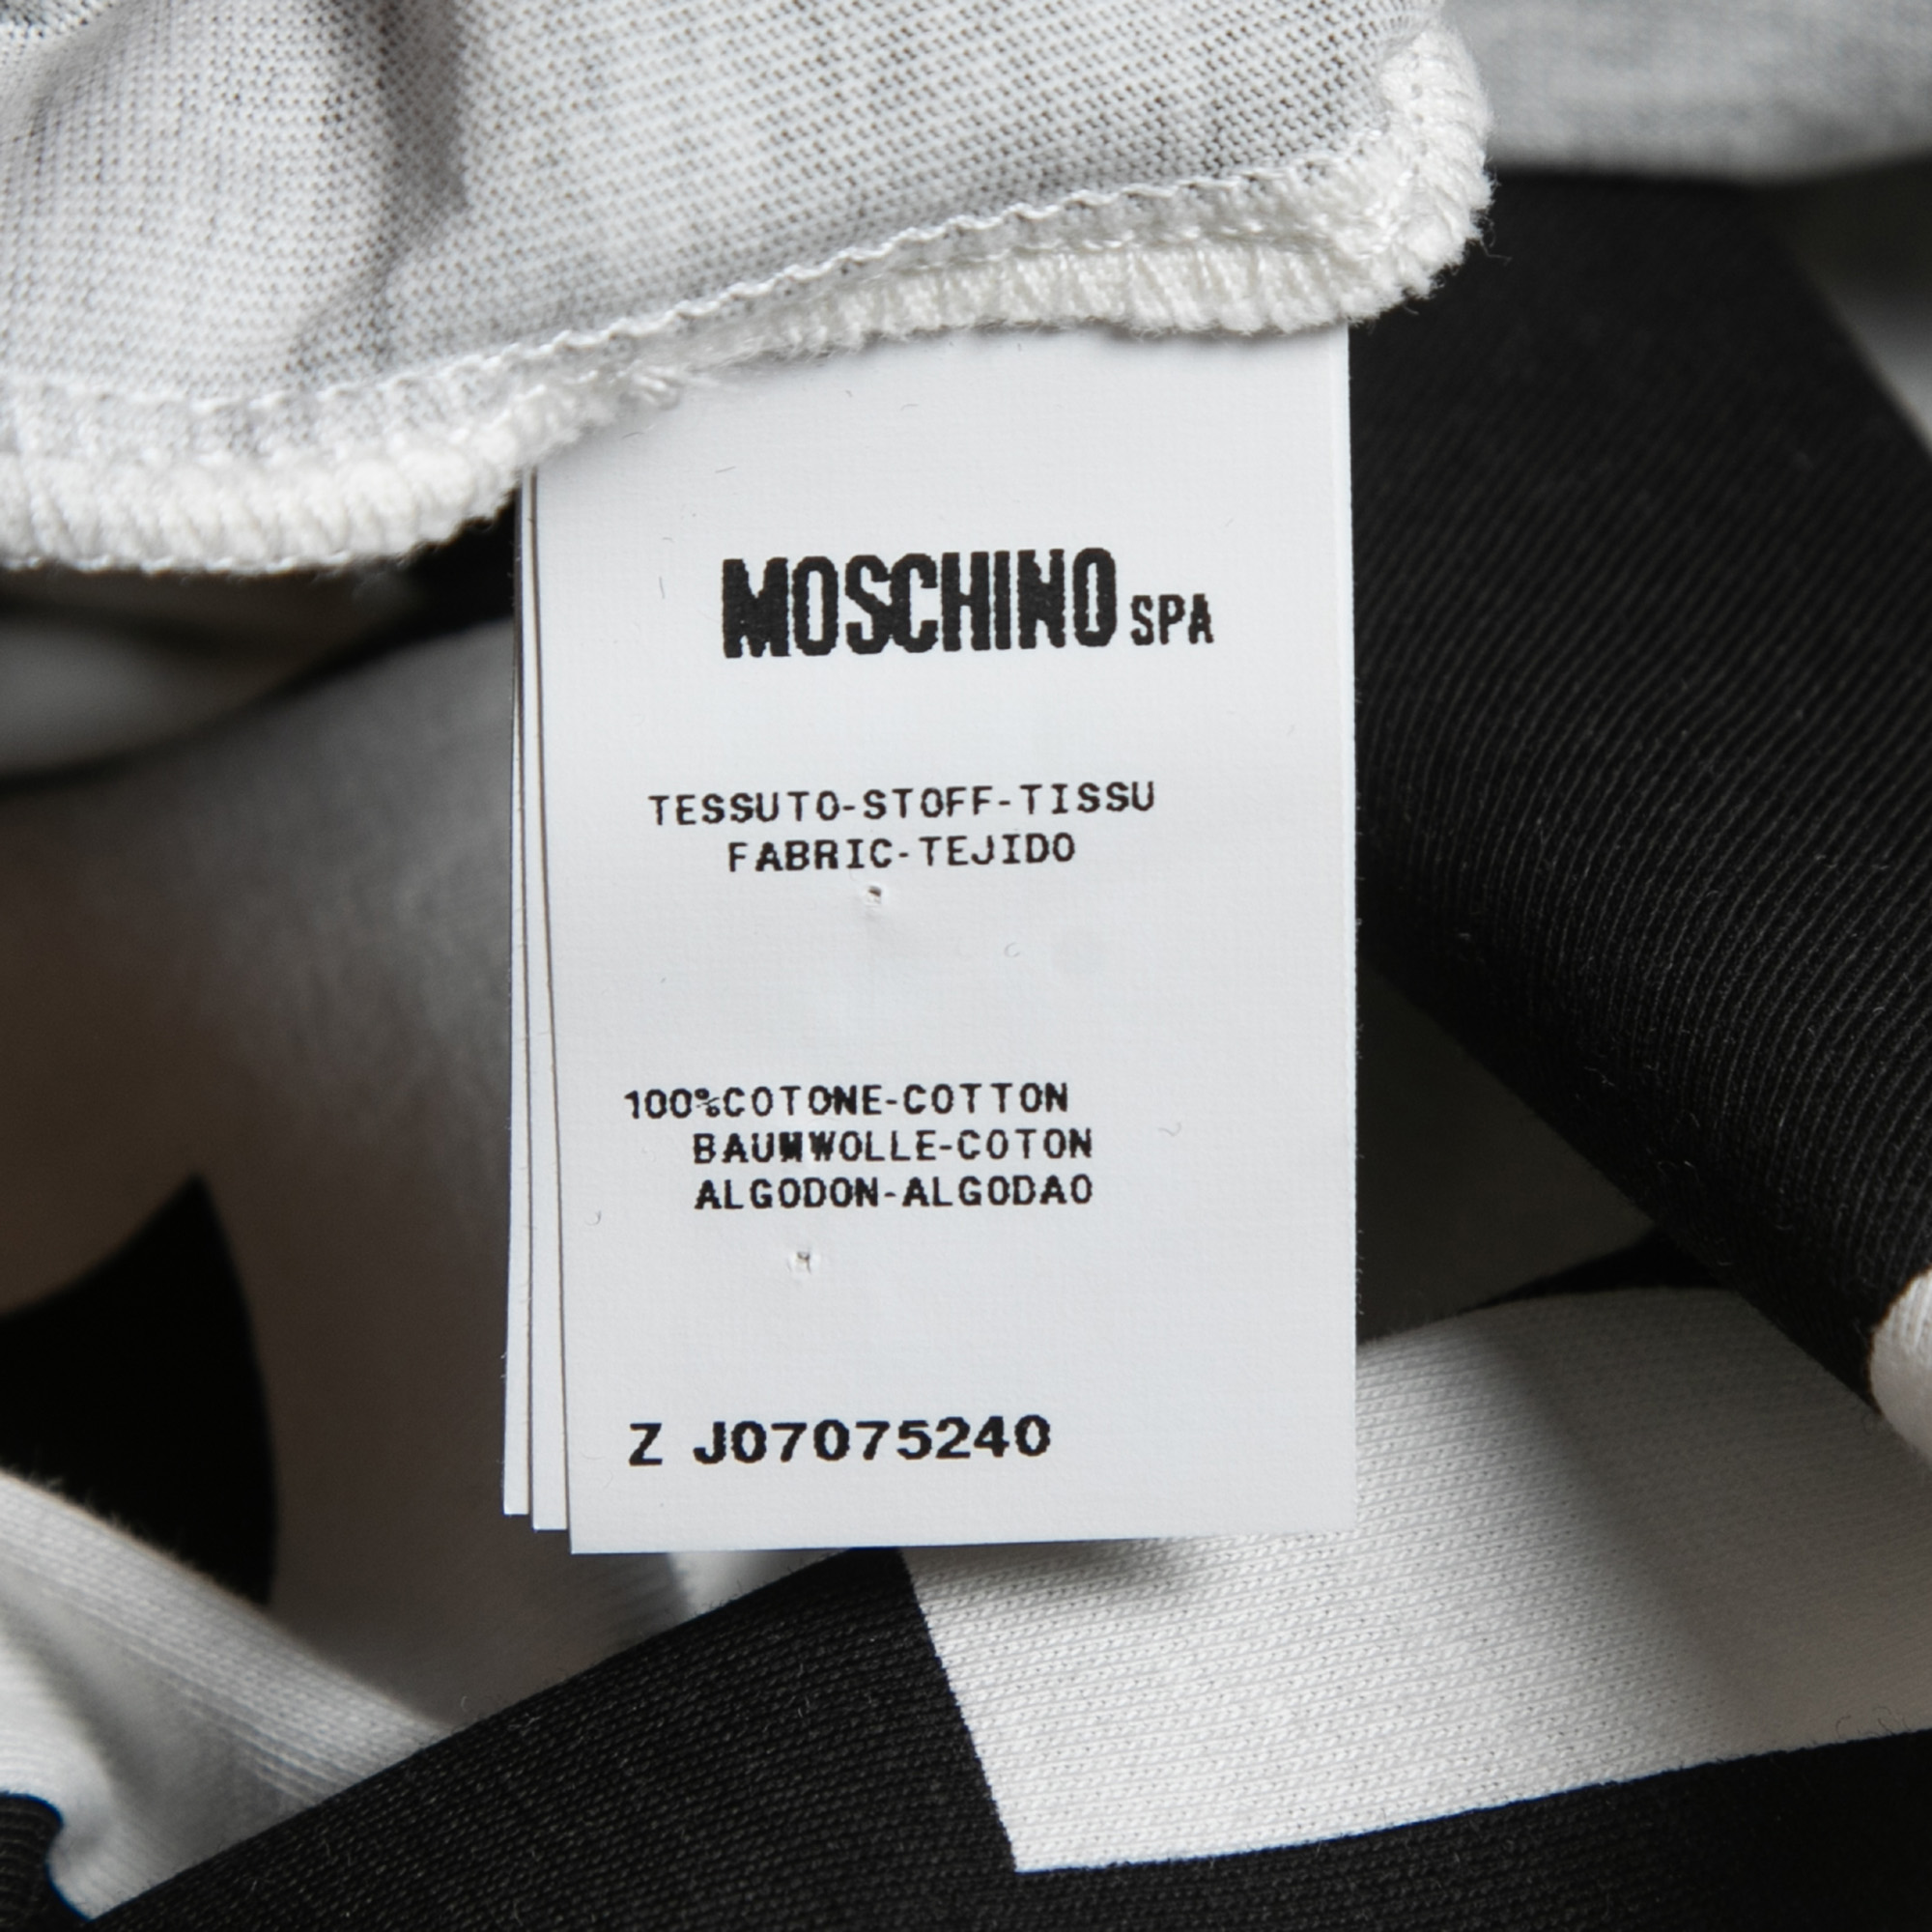 Moschino Couture Monochrome Logo Printed Cotton Knit T-Shirt L